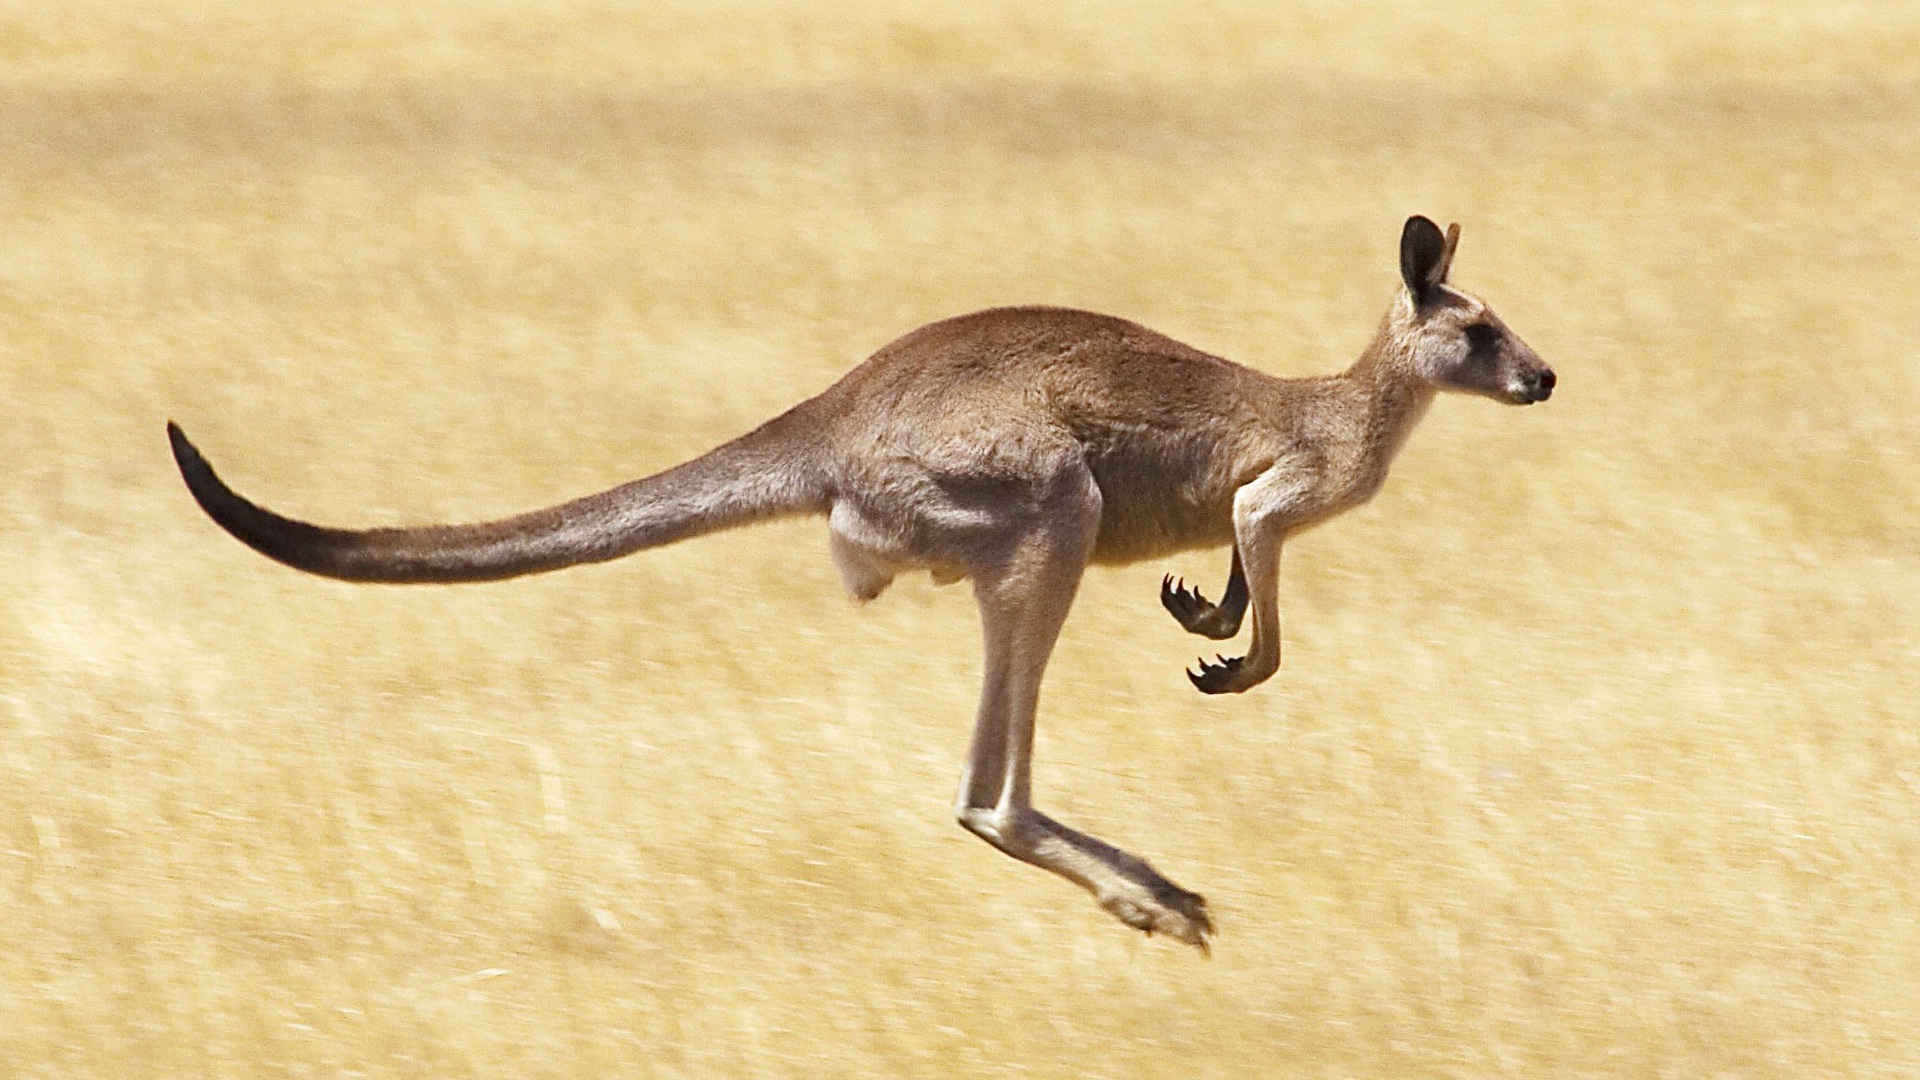 Kangaroo Wallpaper Image Photos Pictures Background